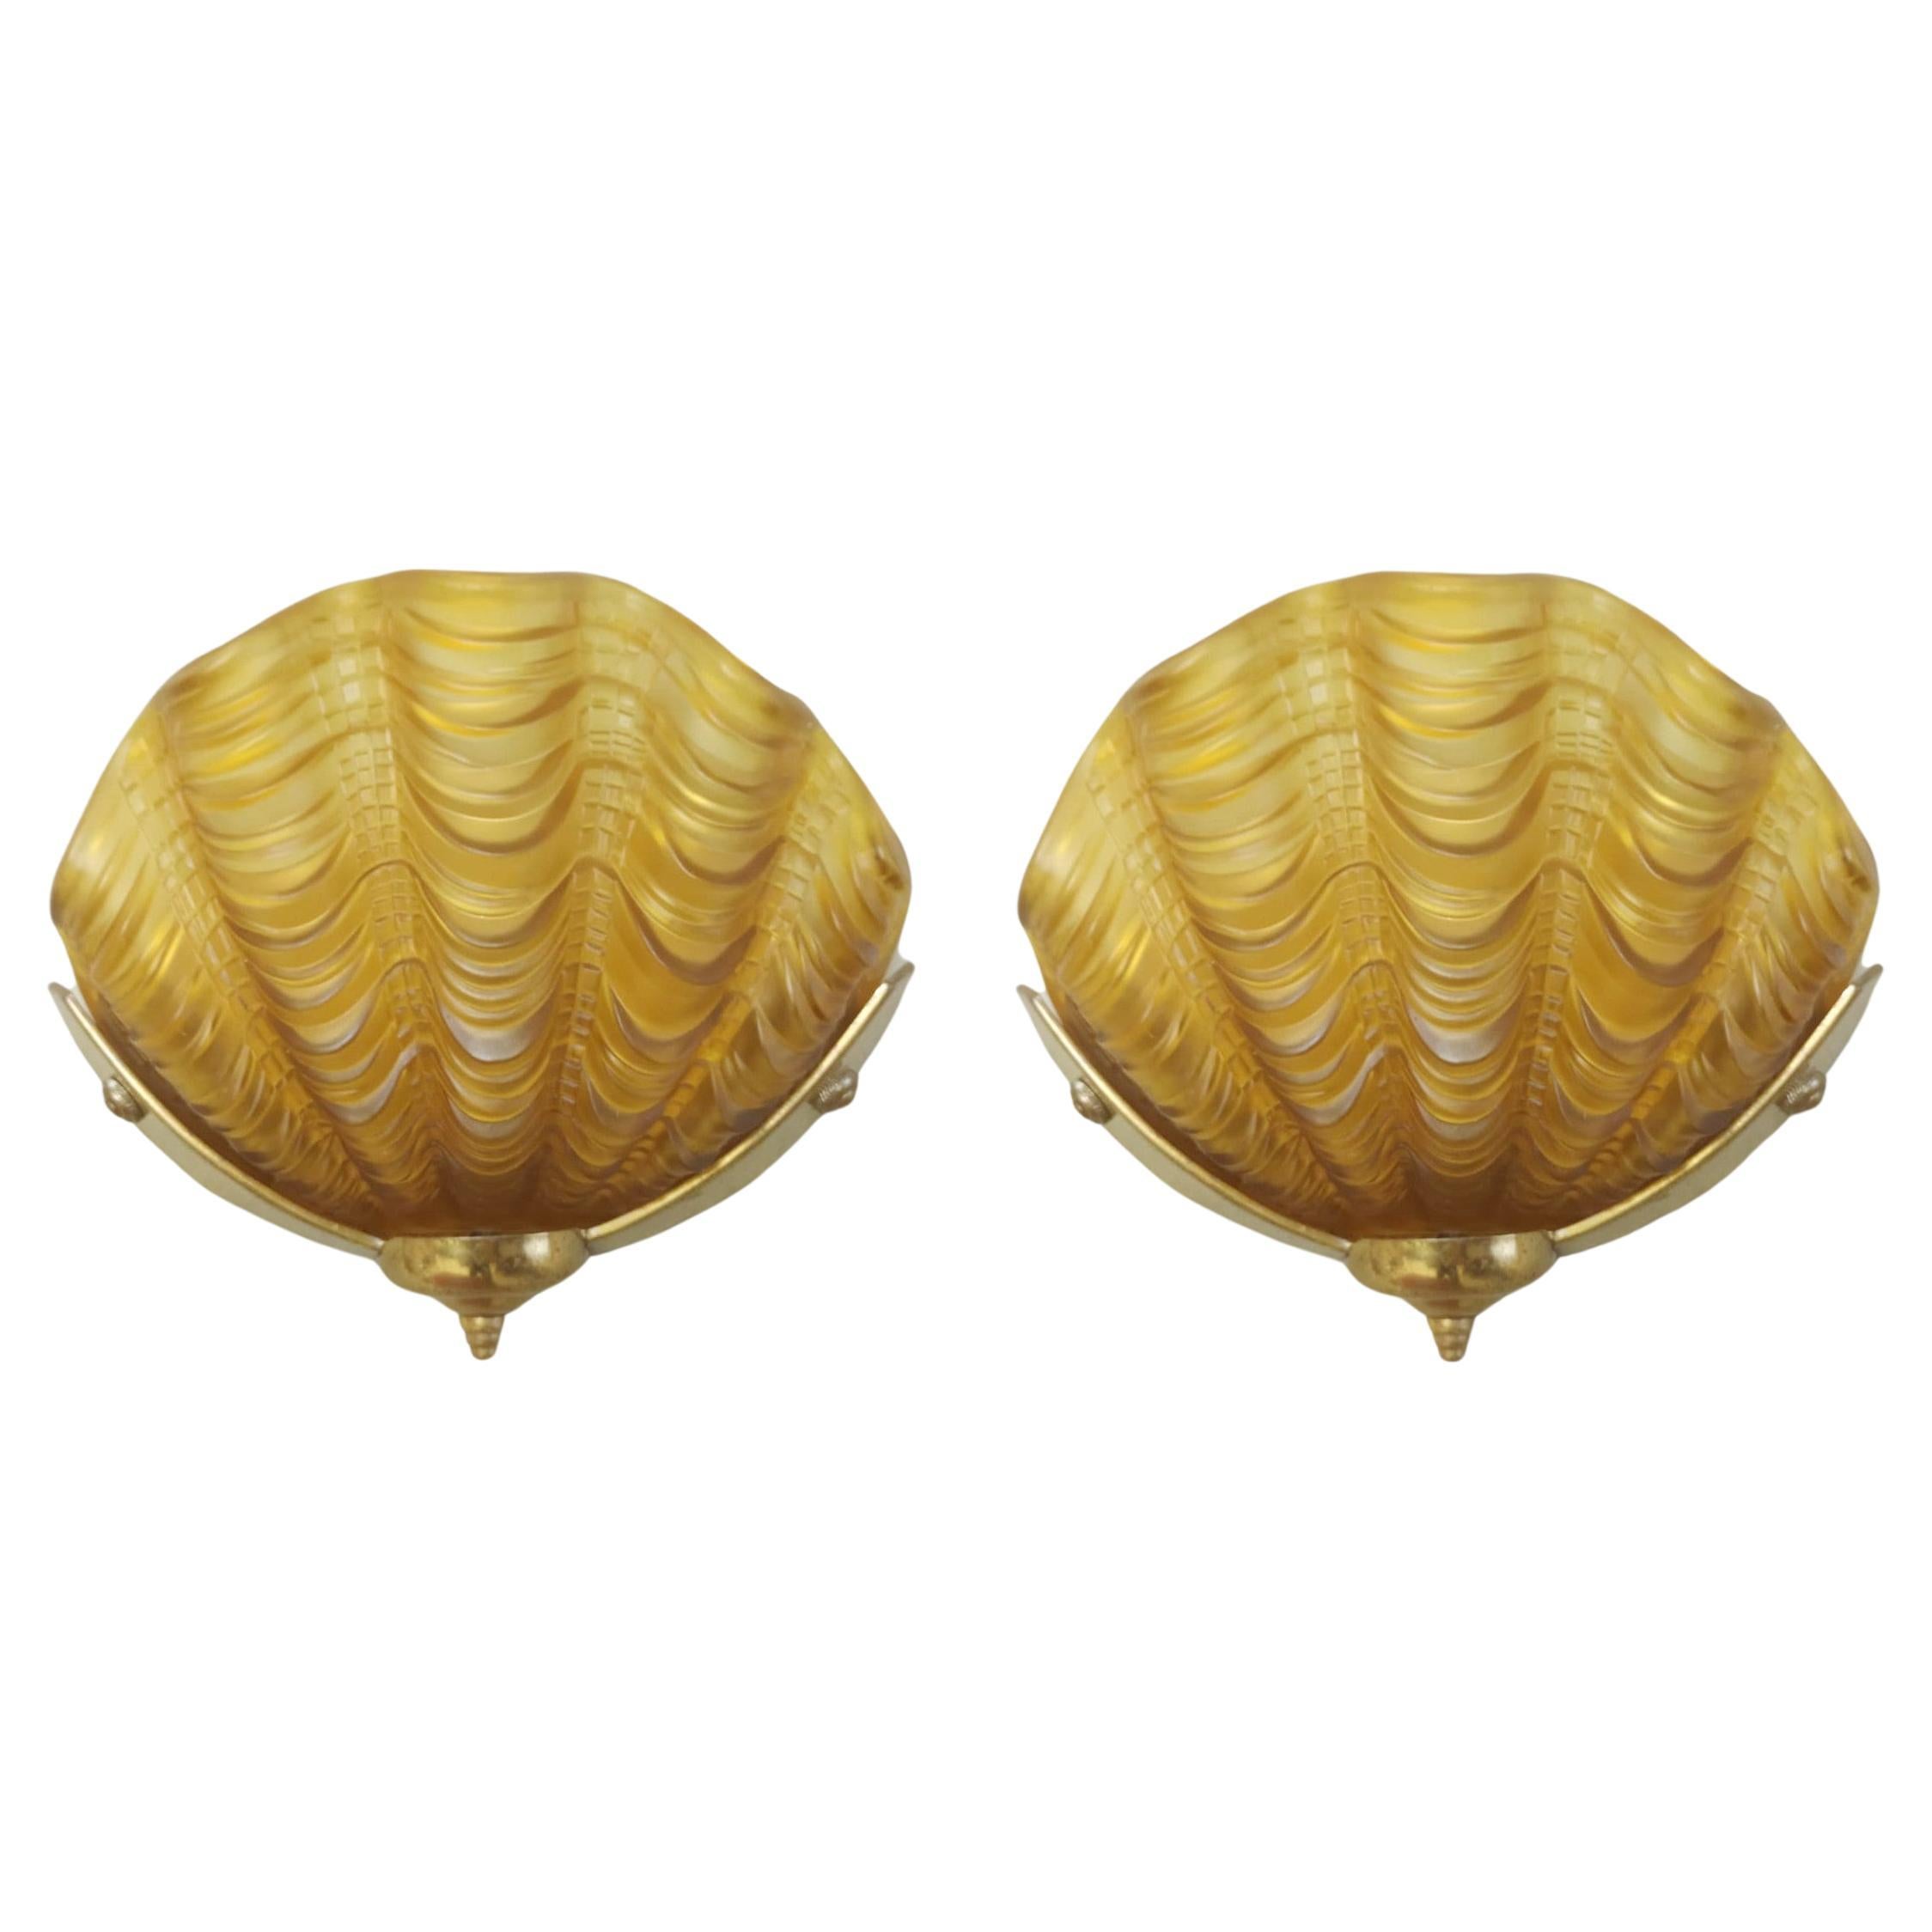 Pair of Art Deco Shell Sconces